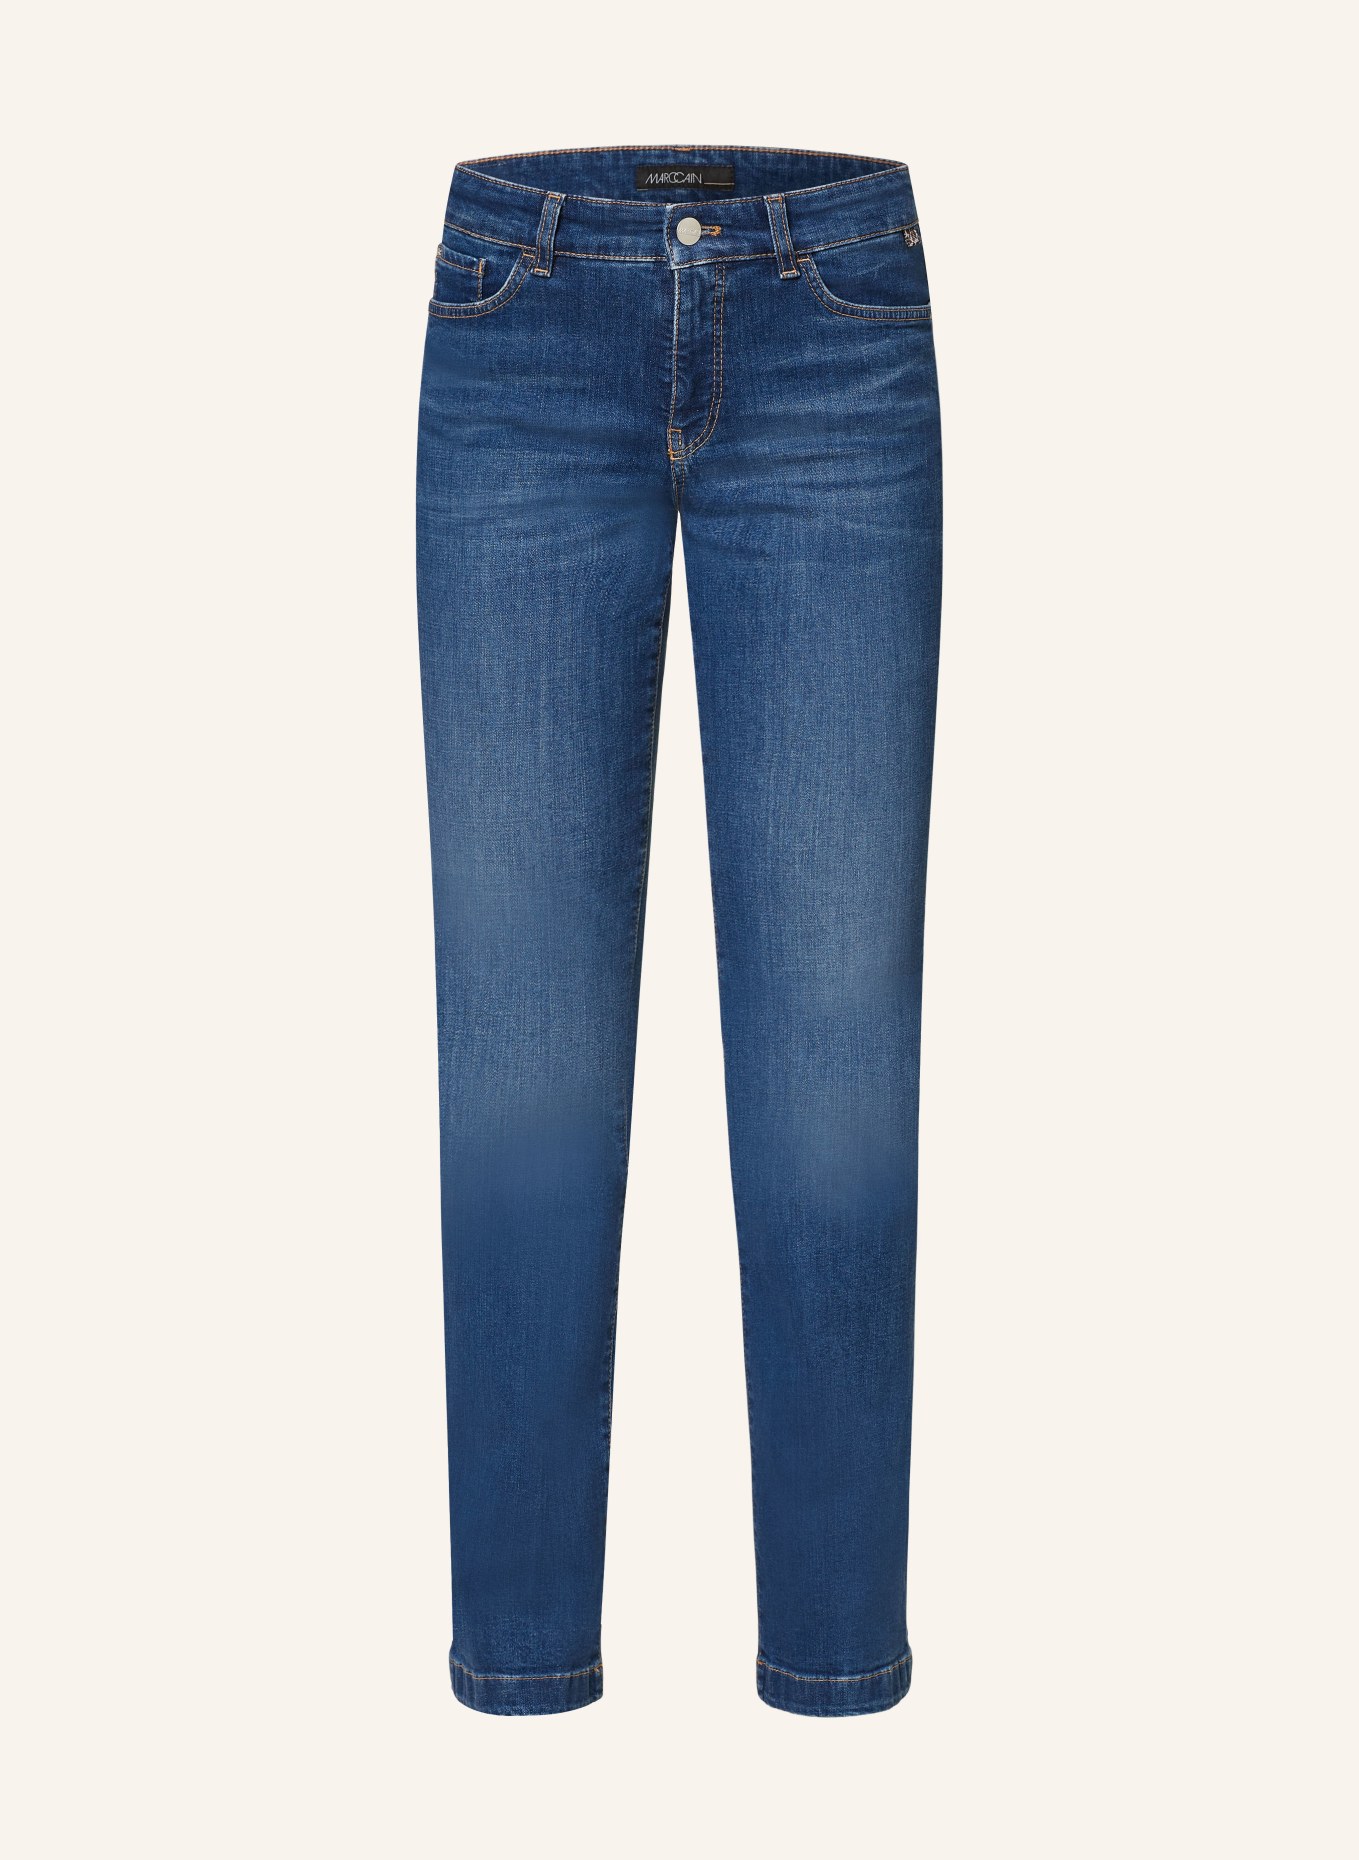 MARC CAIN Jeans FARO, Farbe: 353 blue denim (Bild 1)